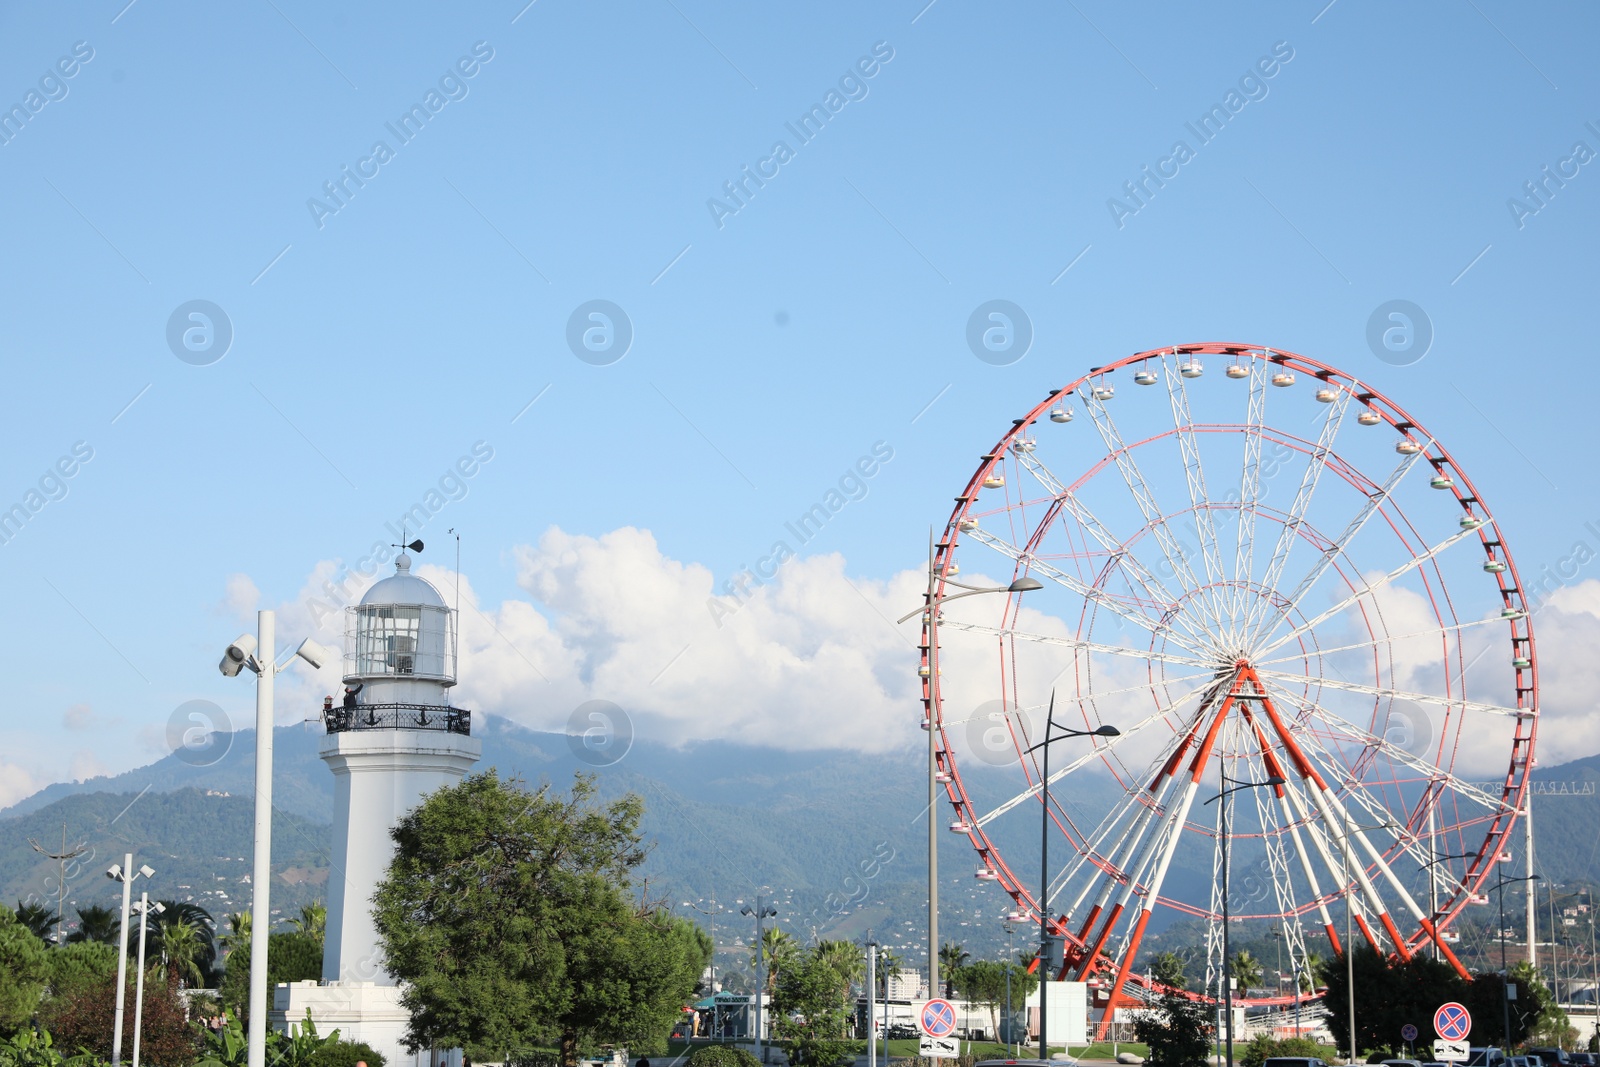 Photo of Batumi, Georgia - October 12, 2022: Ferris wheel and lighthouse in city near mountains